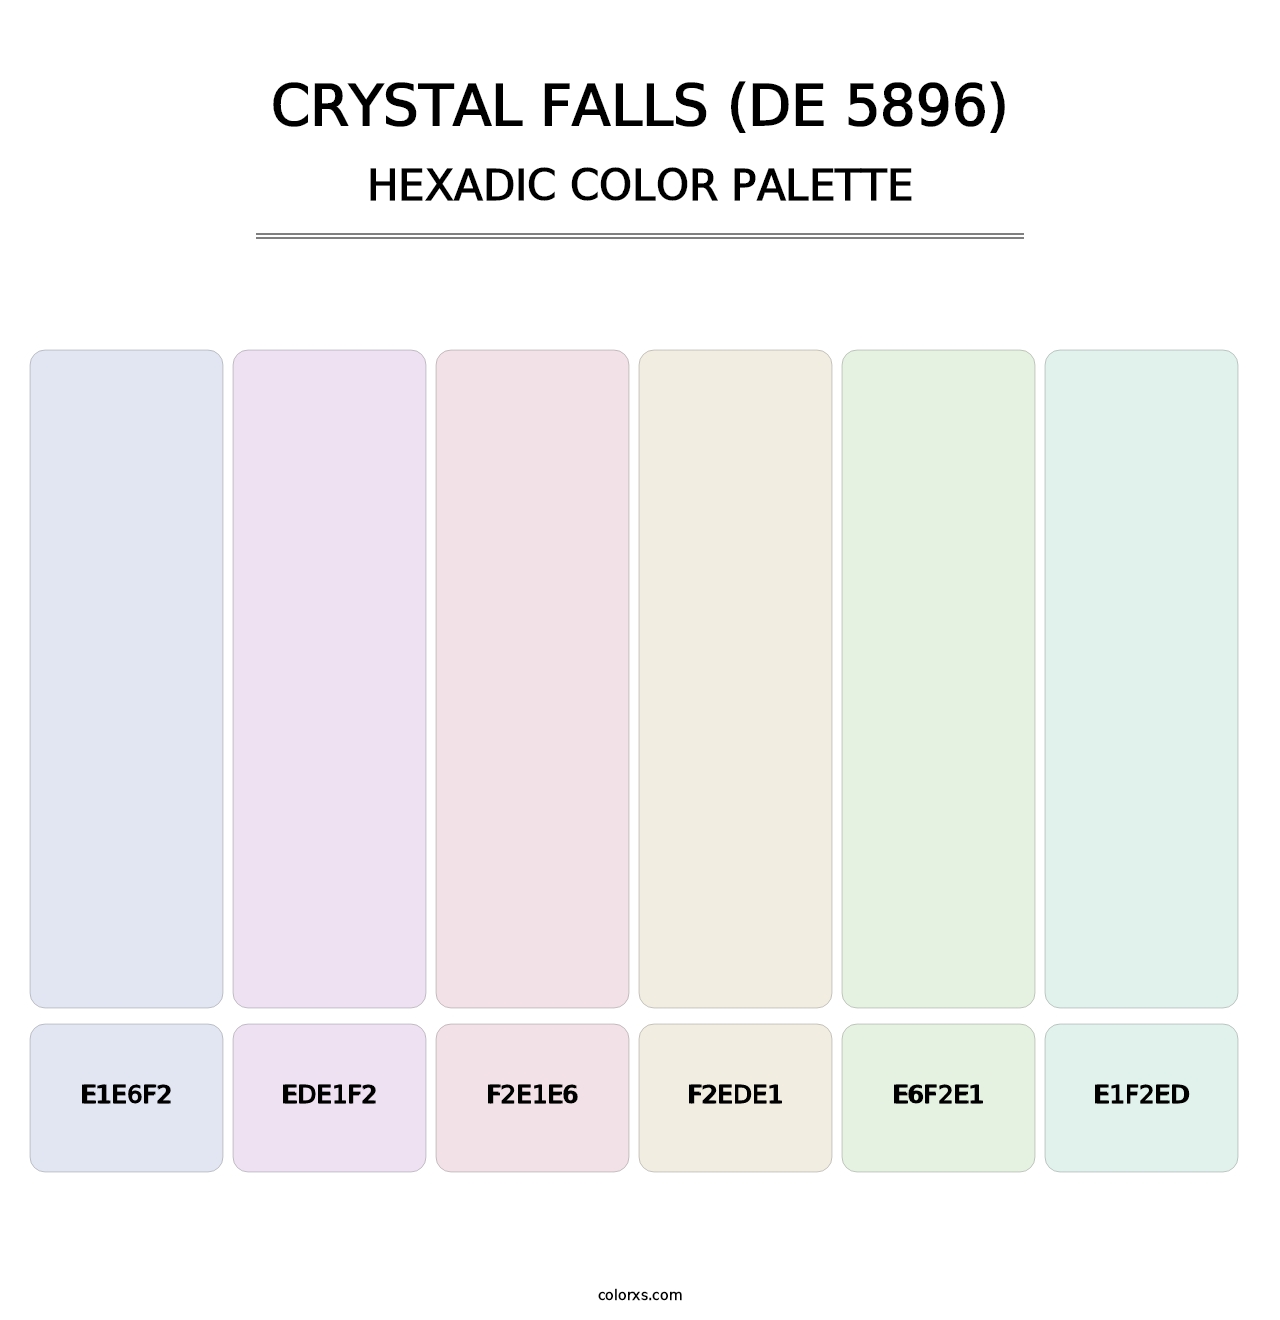 Crystal Falls (DE 5896) - Hexadic Color Palette